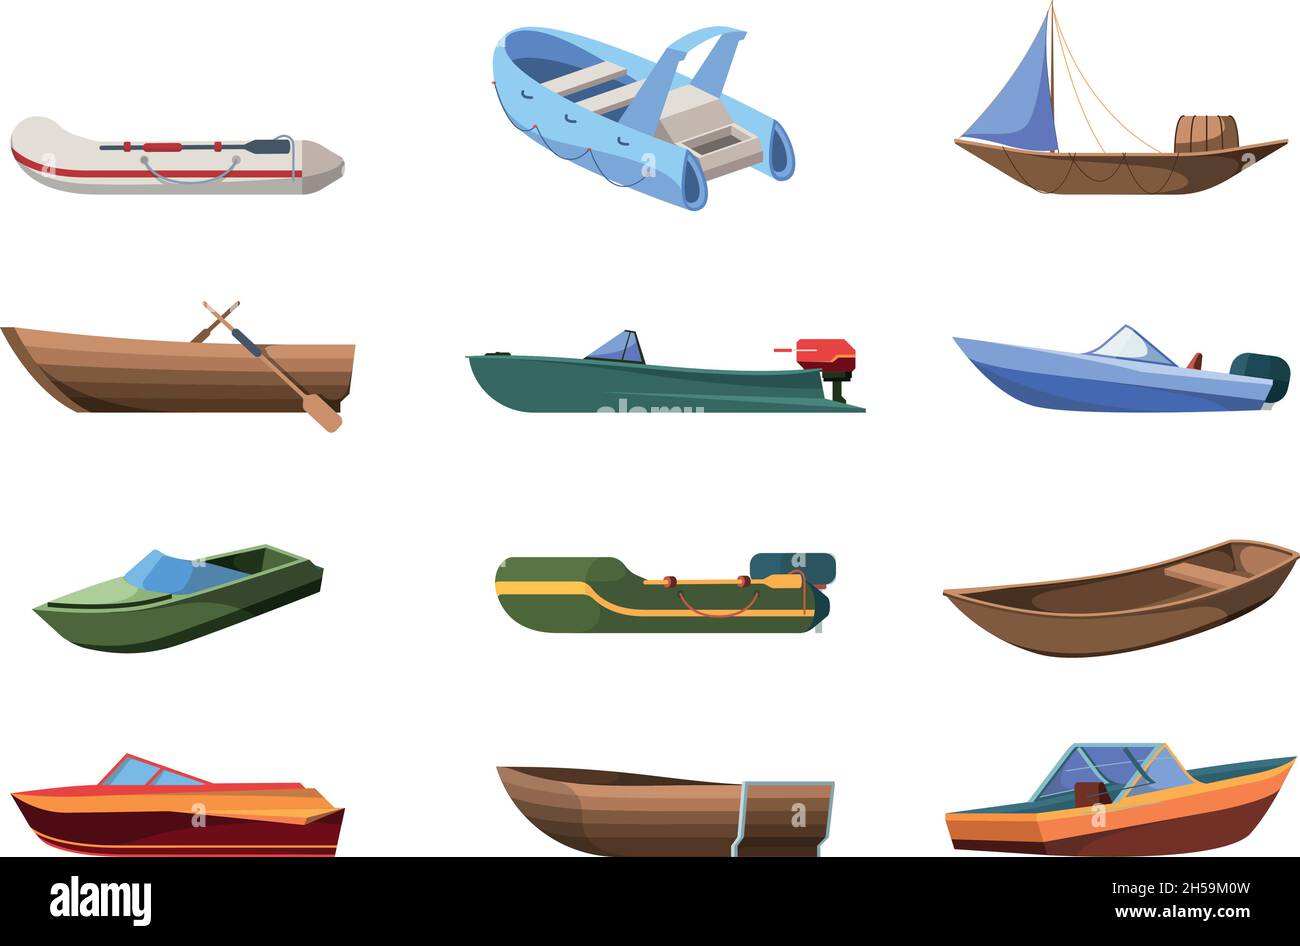 Wooden boats. Sea or ocean transport boats little ships garish vector cartoon water vehicles Stock Vector